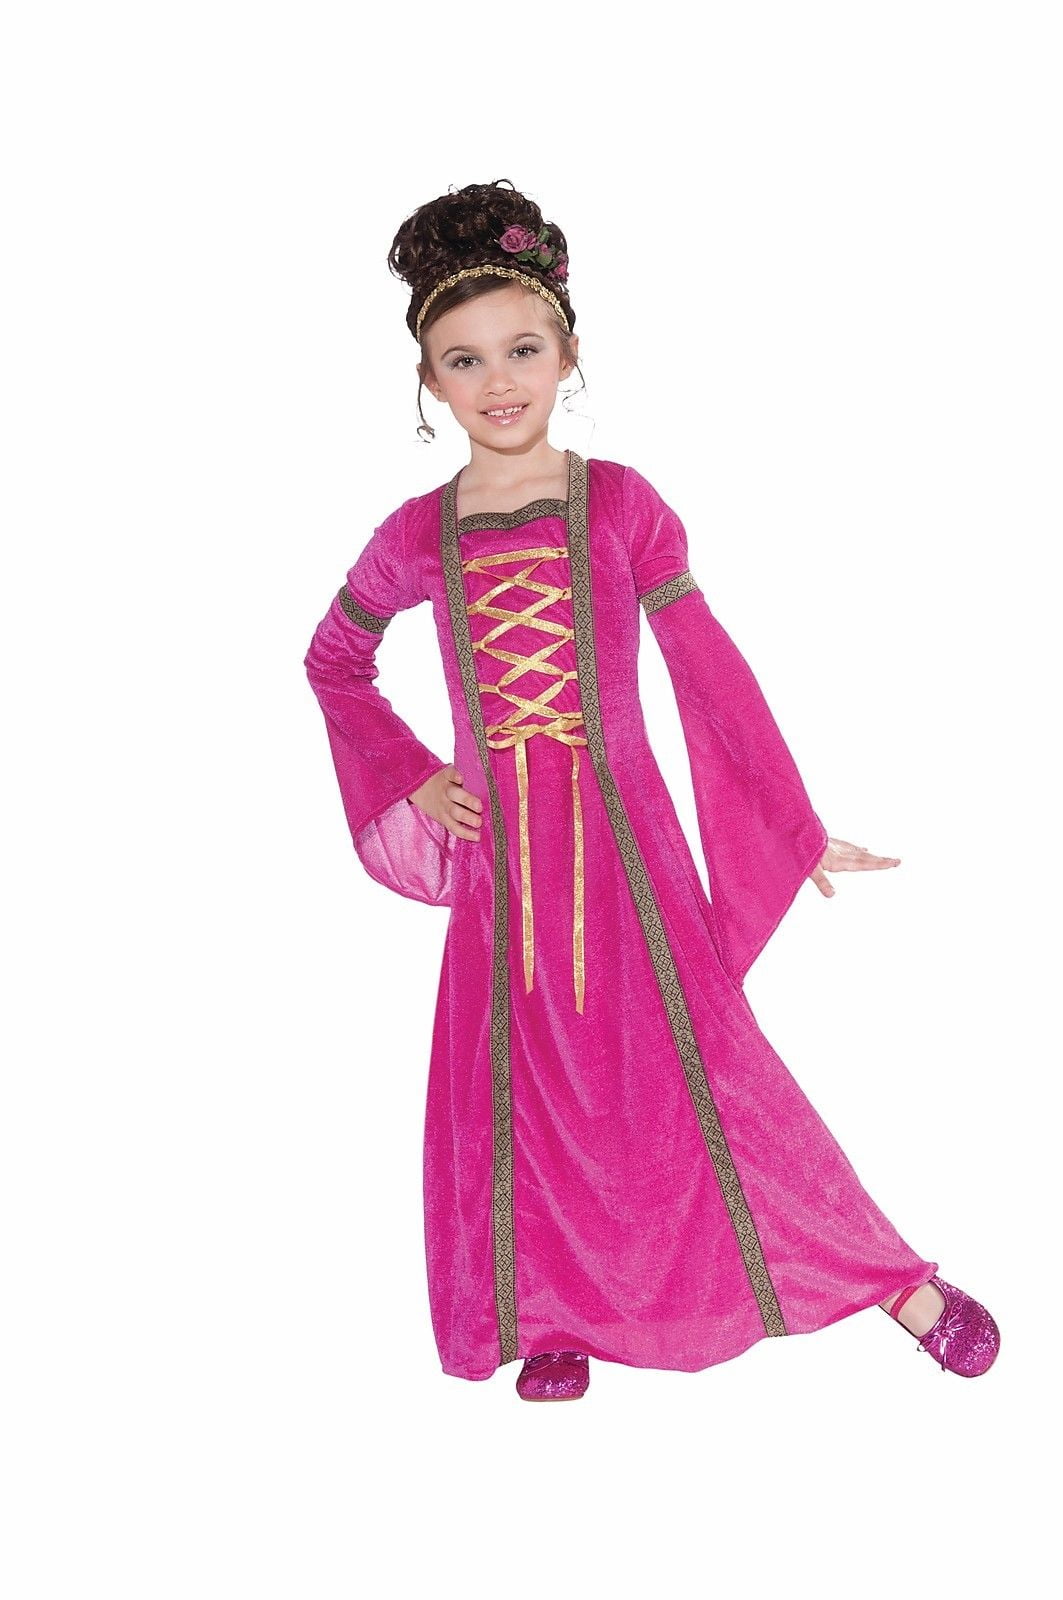 Medieval Queen Costume for Kids Halloween Renaissance Fancy Dress